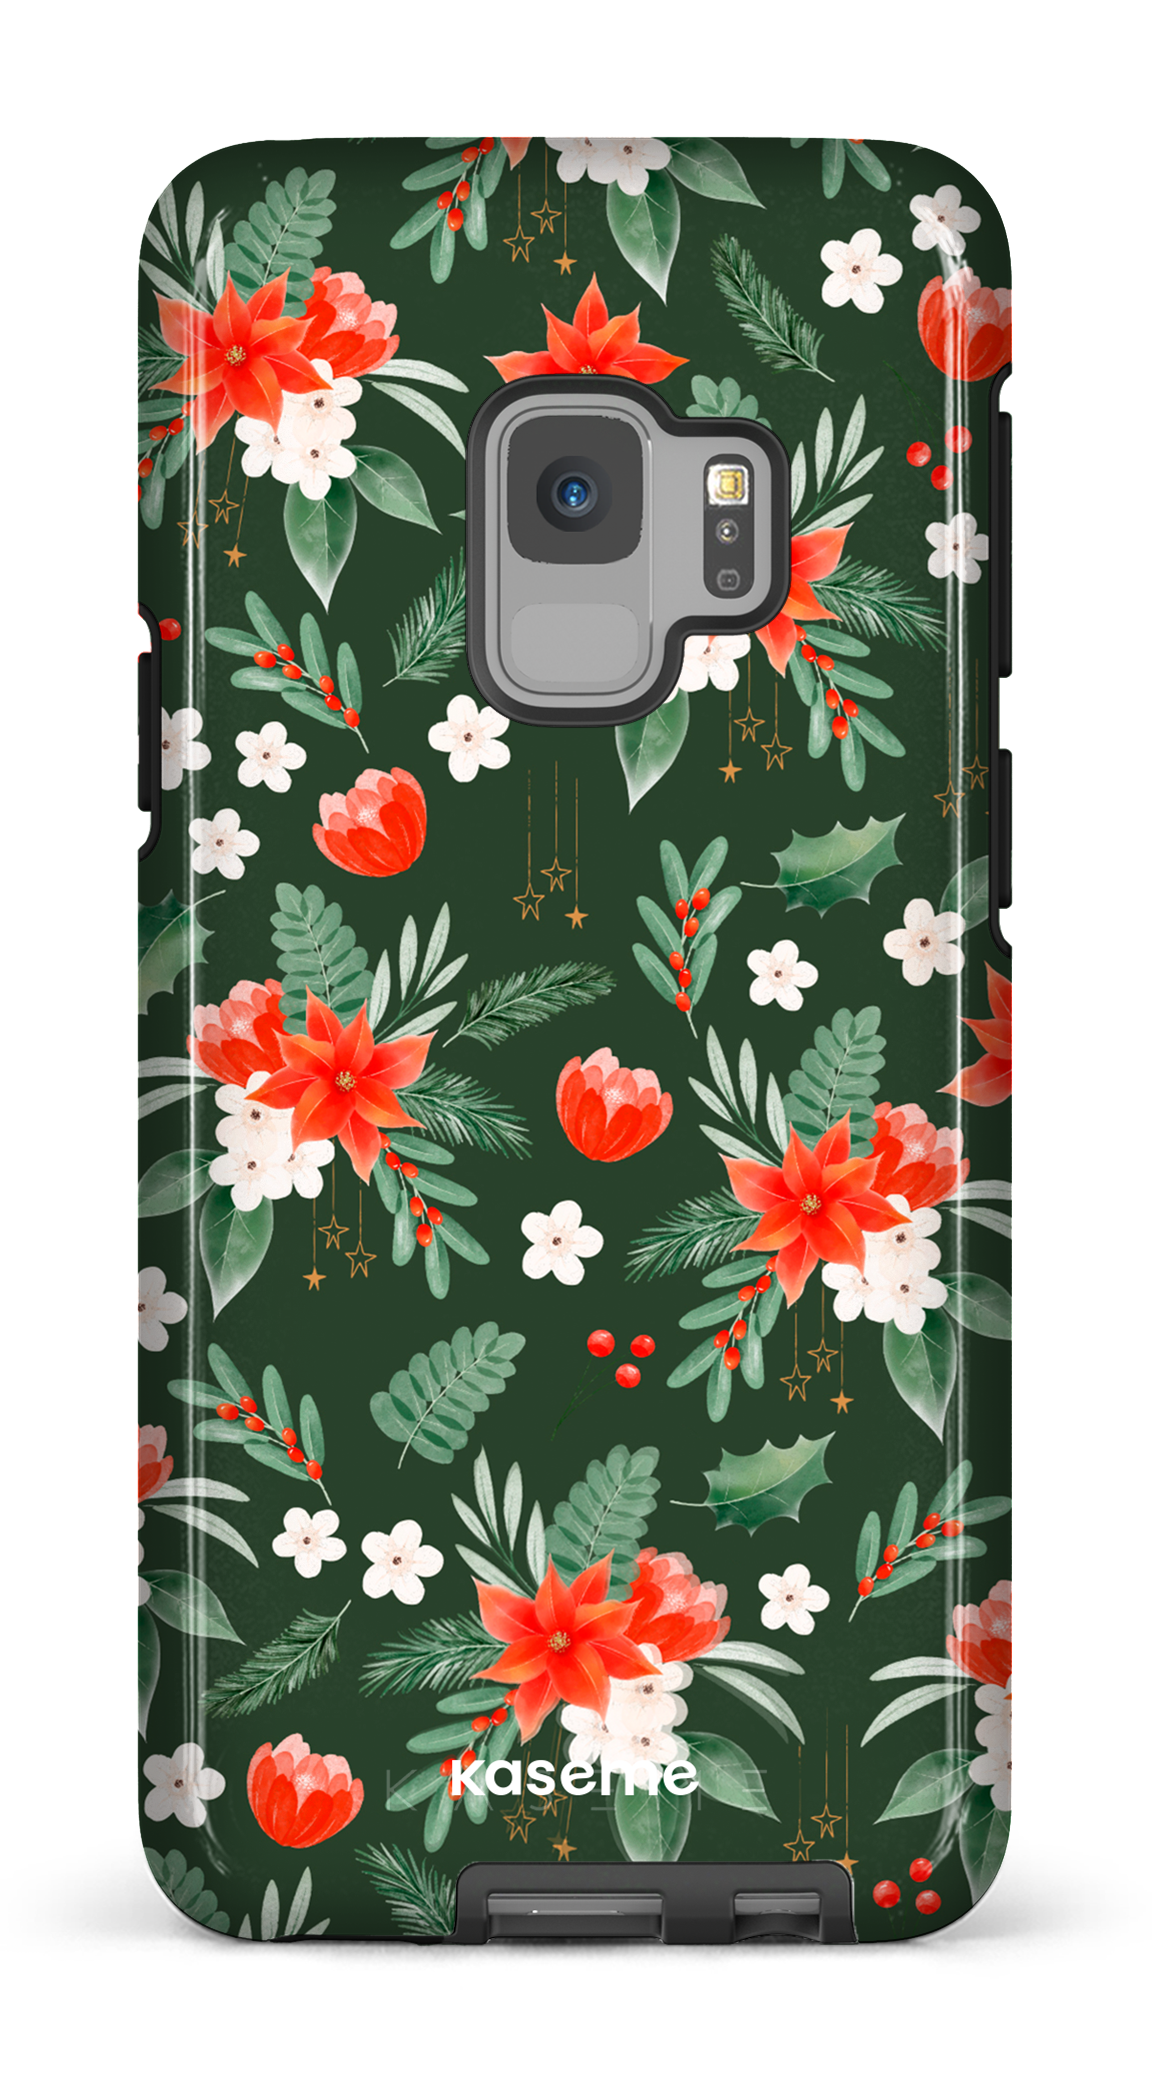 Poinsettia - Galaxy S9